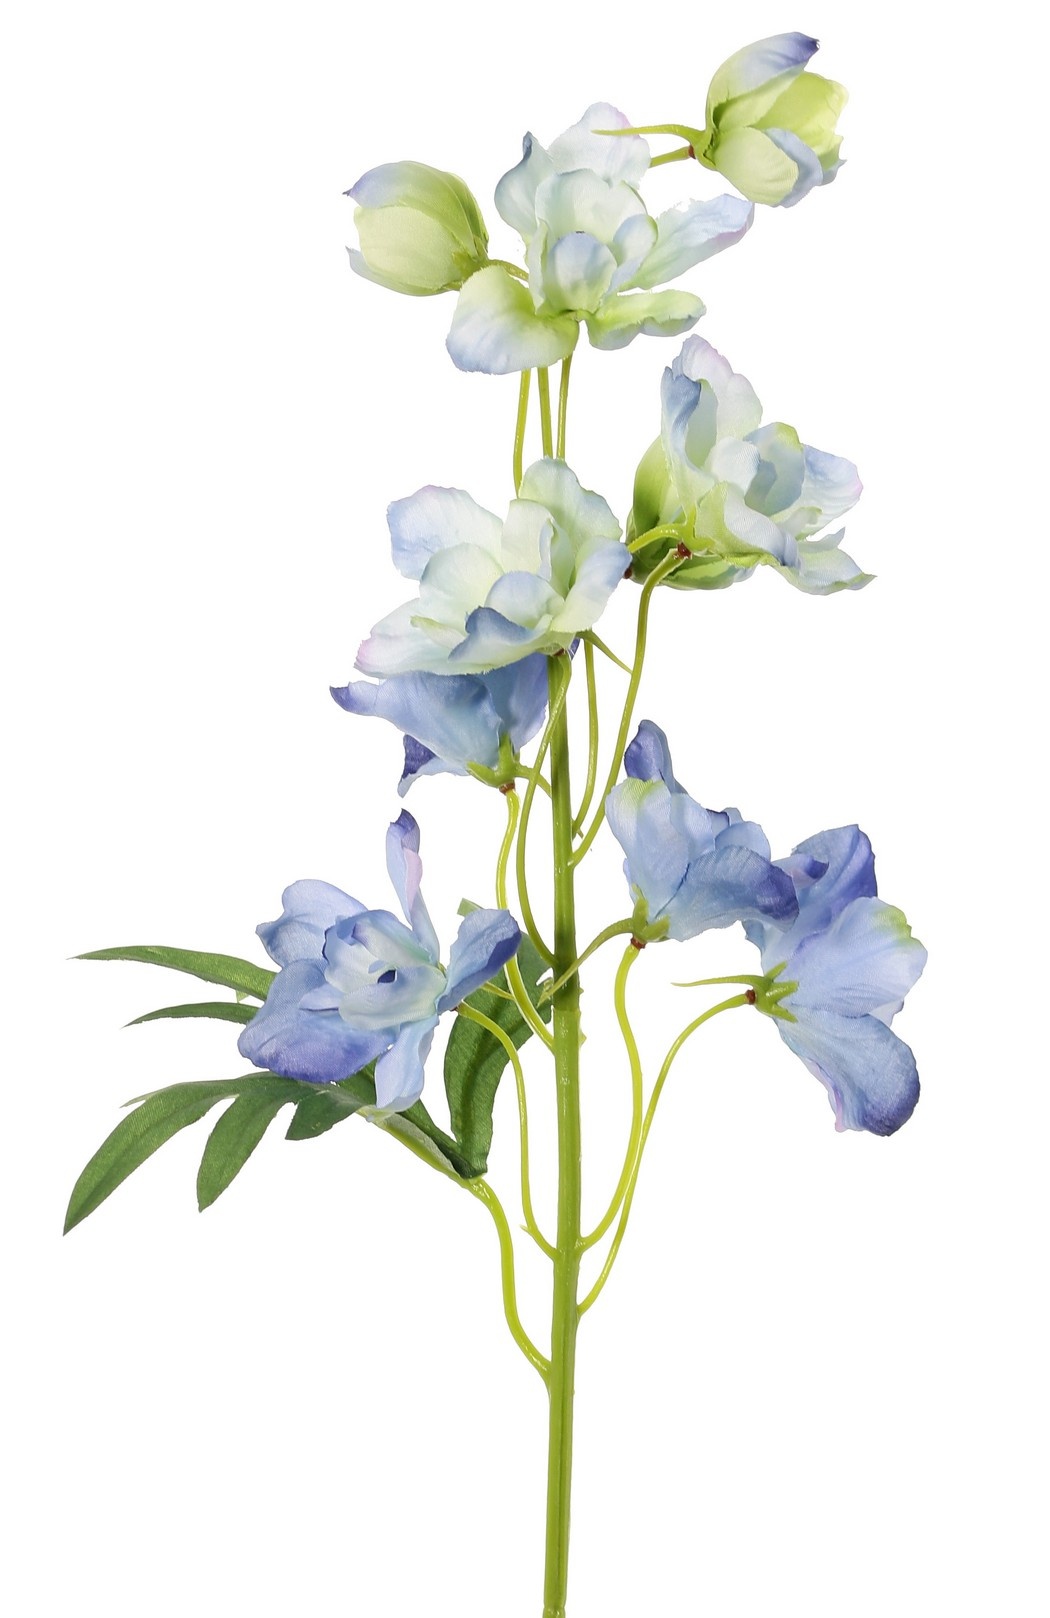 Rittersporn (Delphinium) mit 7 Blüten (Ø 5 cm), 3 Knospen & 1 Blatt, 50 cm